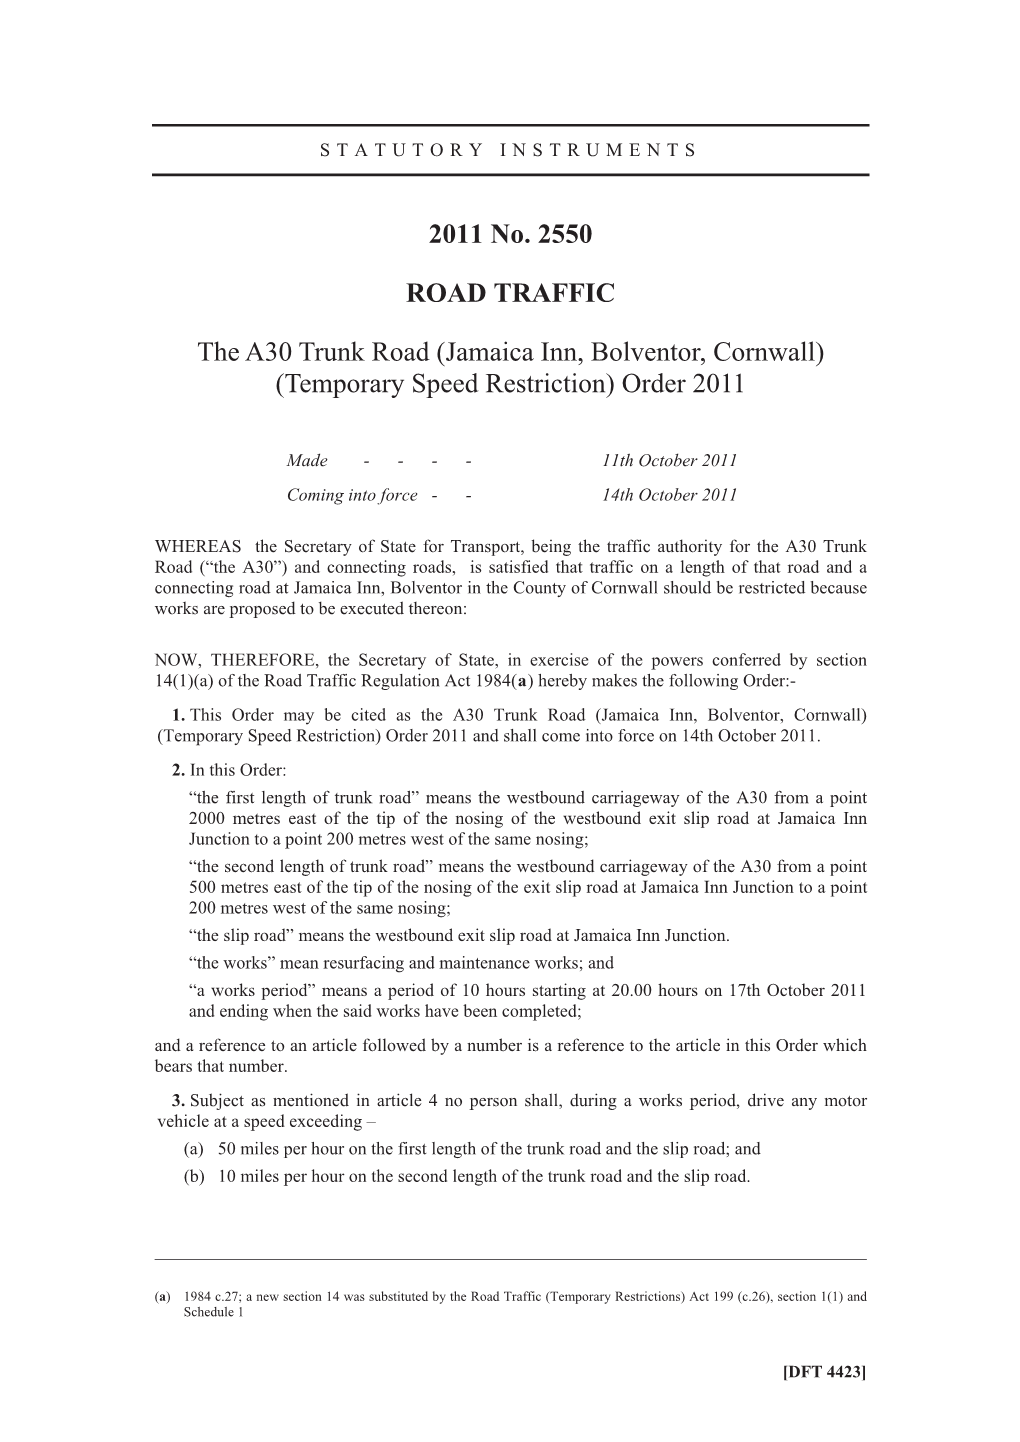 (Jamaica Inn, Bolventor, Cornwall) (Temporary Speed Restriction) Order 2011